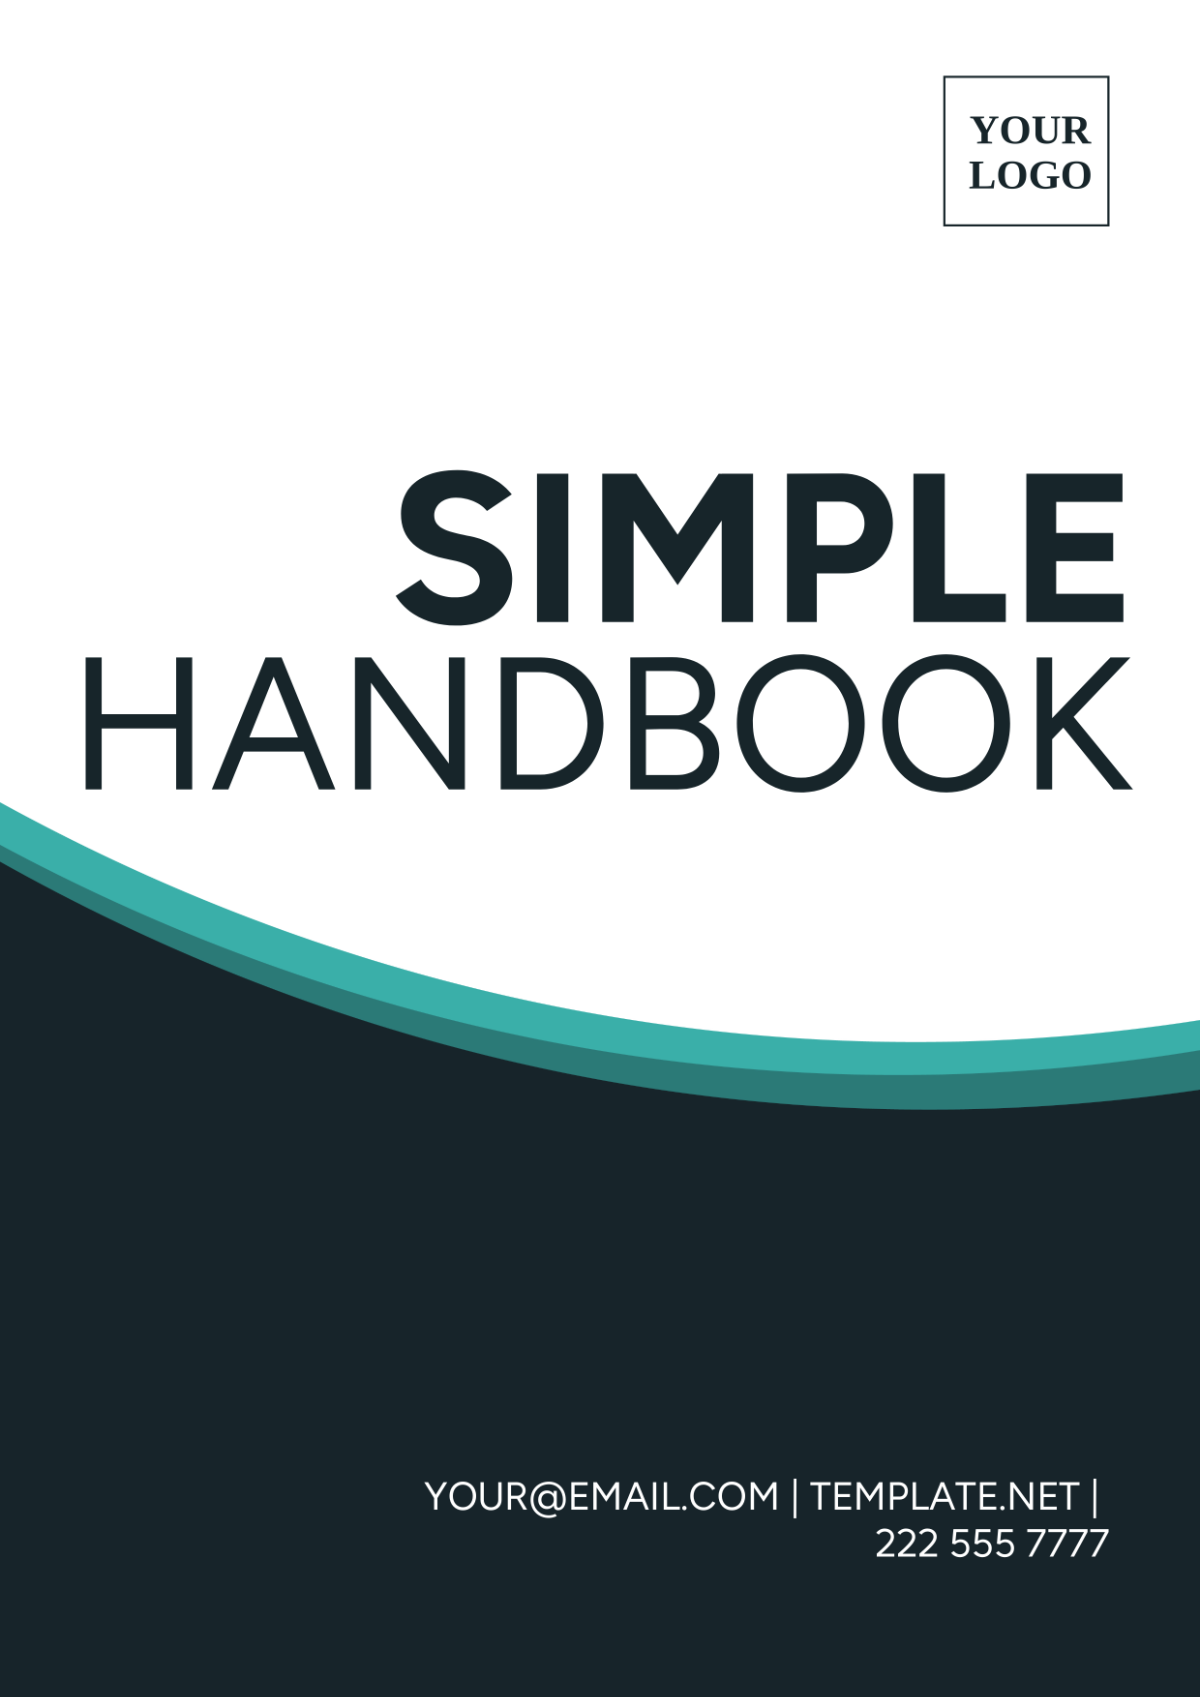 Simple Handbook Template